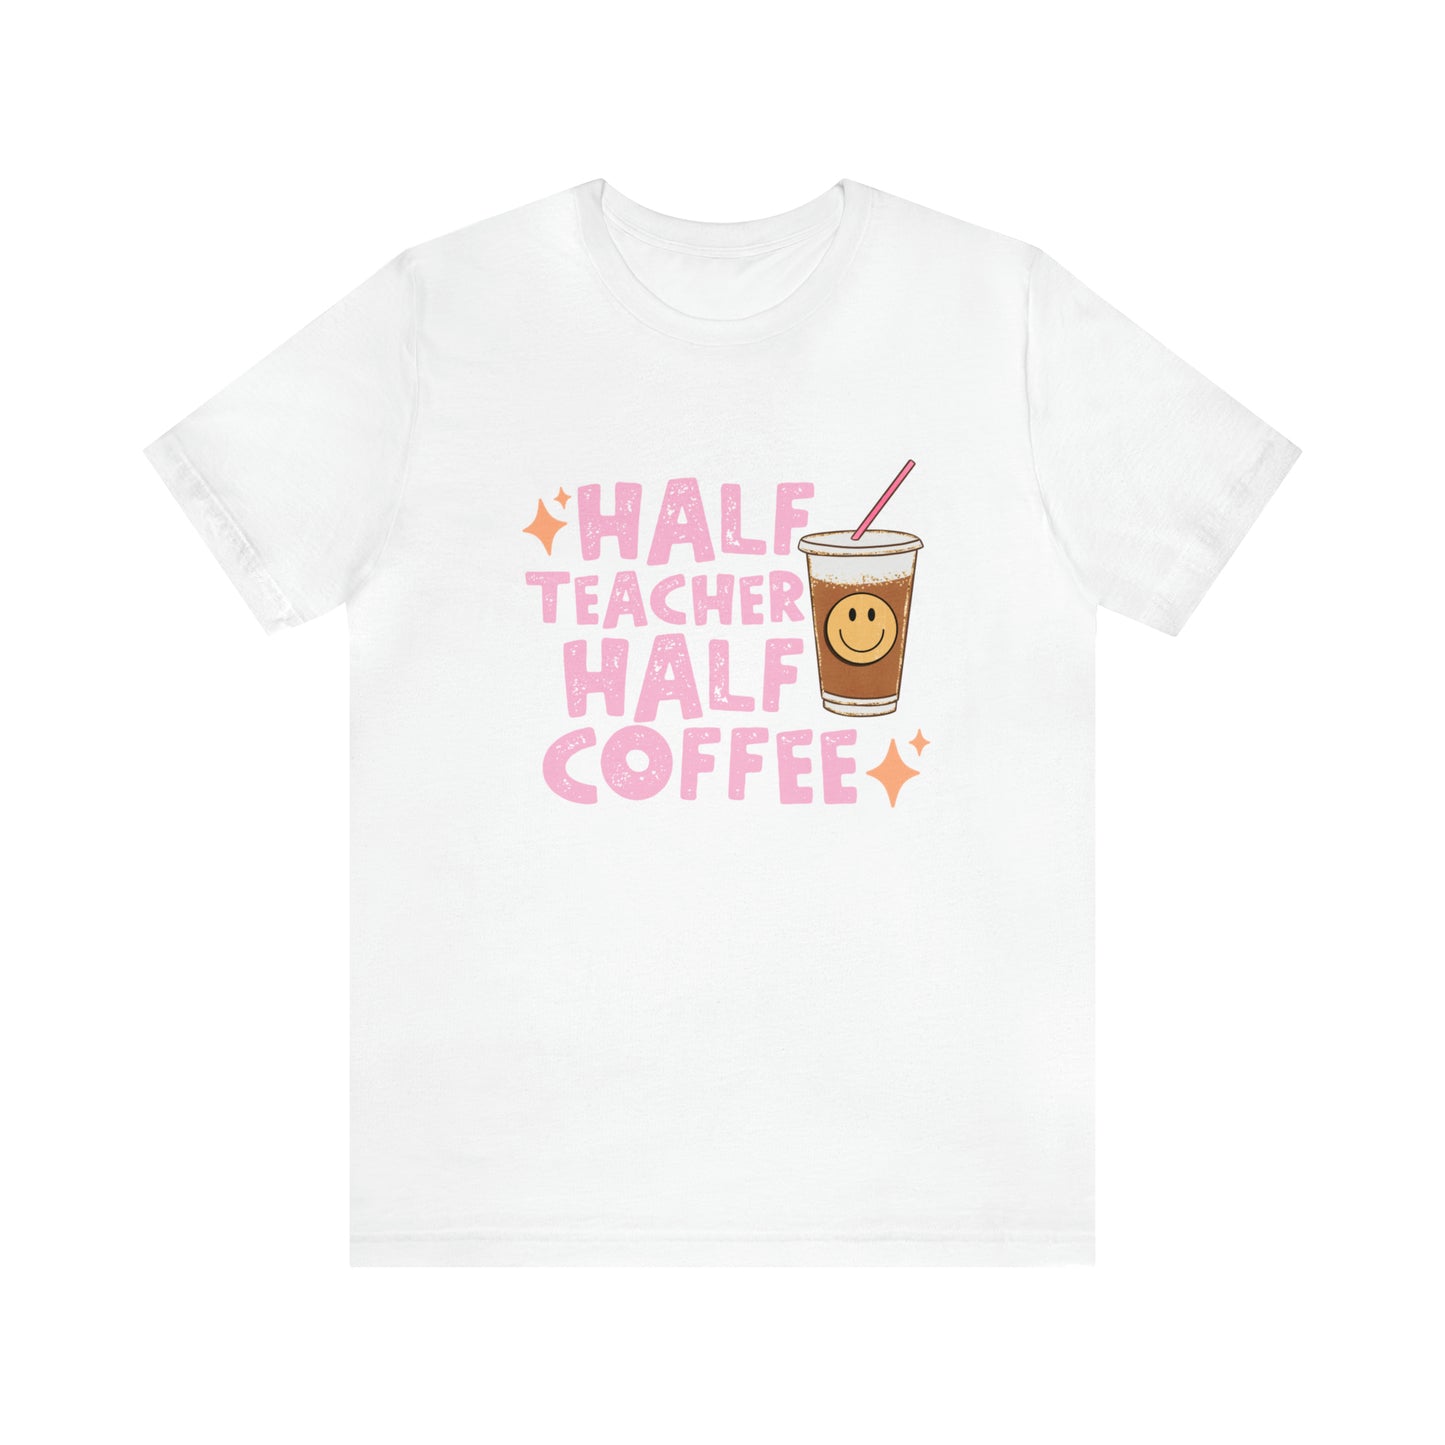 Half Teacher Half Coffee Graphic Tee